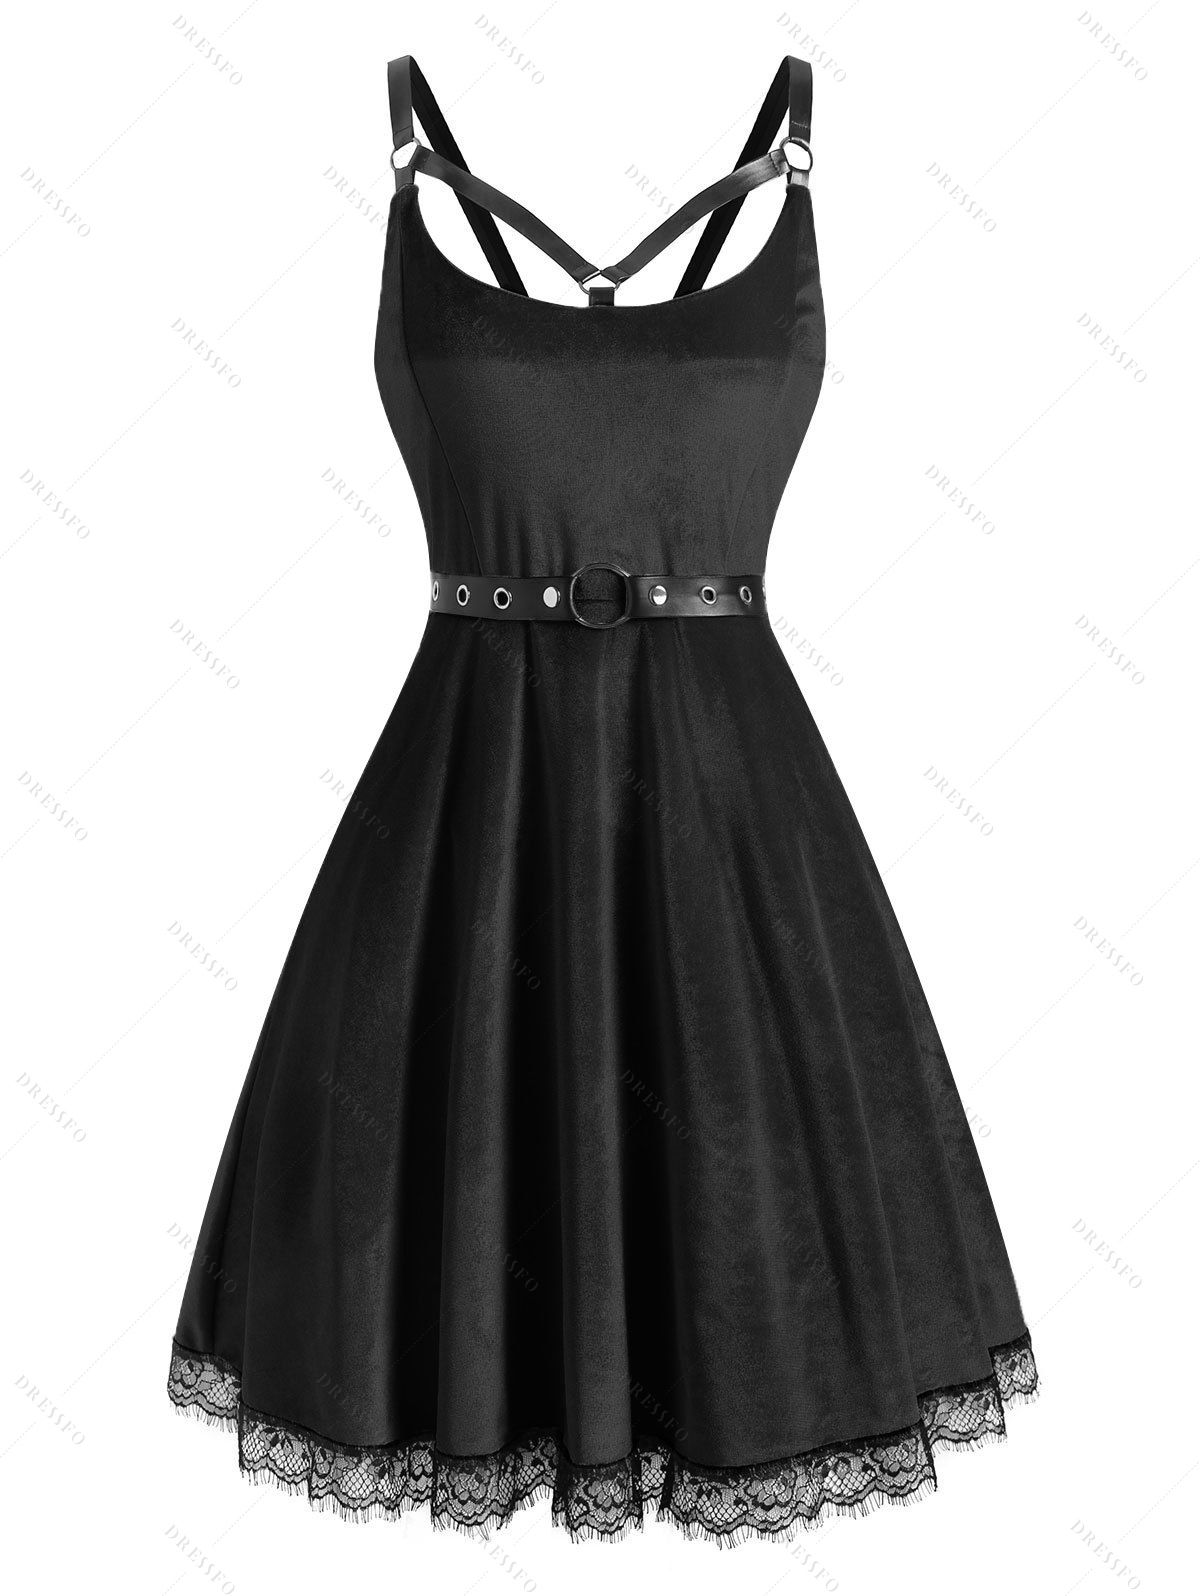 Lace Hem Grommet Velvet Caged A Line Dress - BLACK M